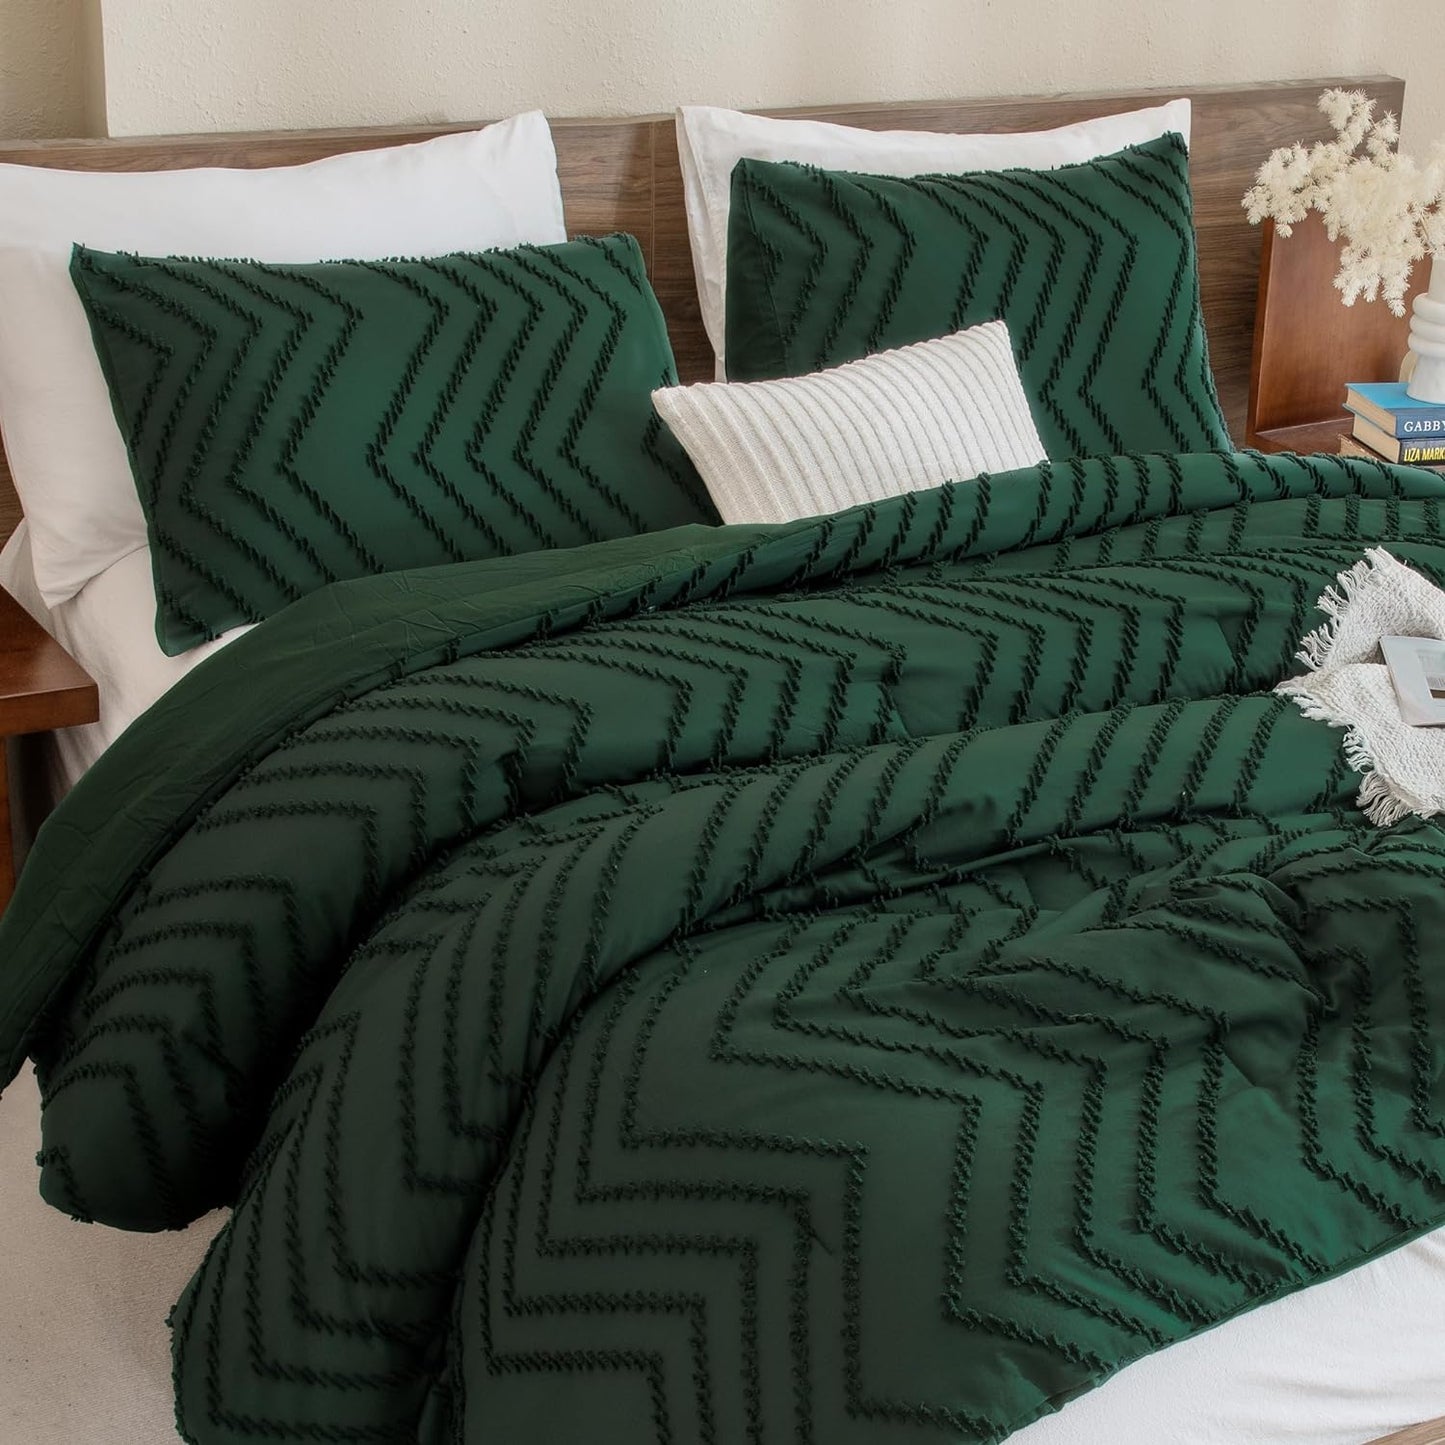 Emerald Green Comforter Set Full Size, Boho Dark Green Soft Warm Bedding Comforter Sets for Full Bed, 3 Pieces Forest Green Vintage Chevron Tufted Aesthetic Comforter Set